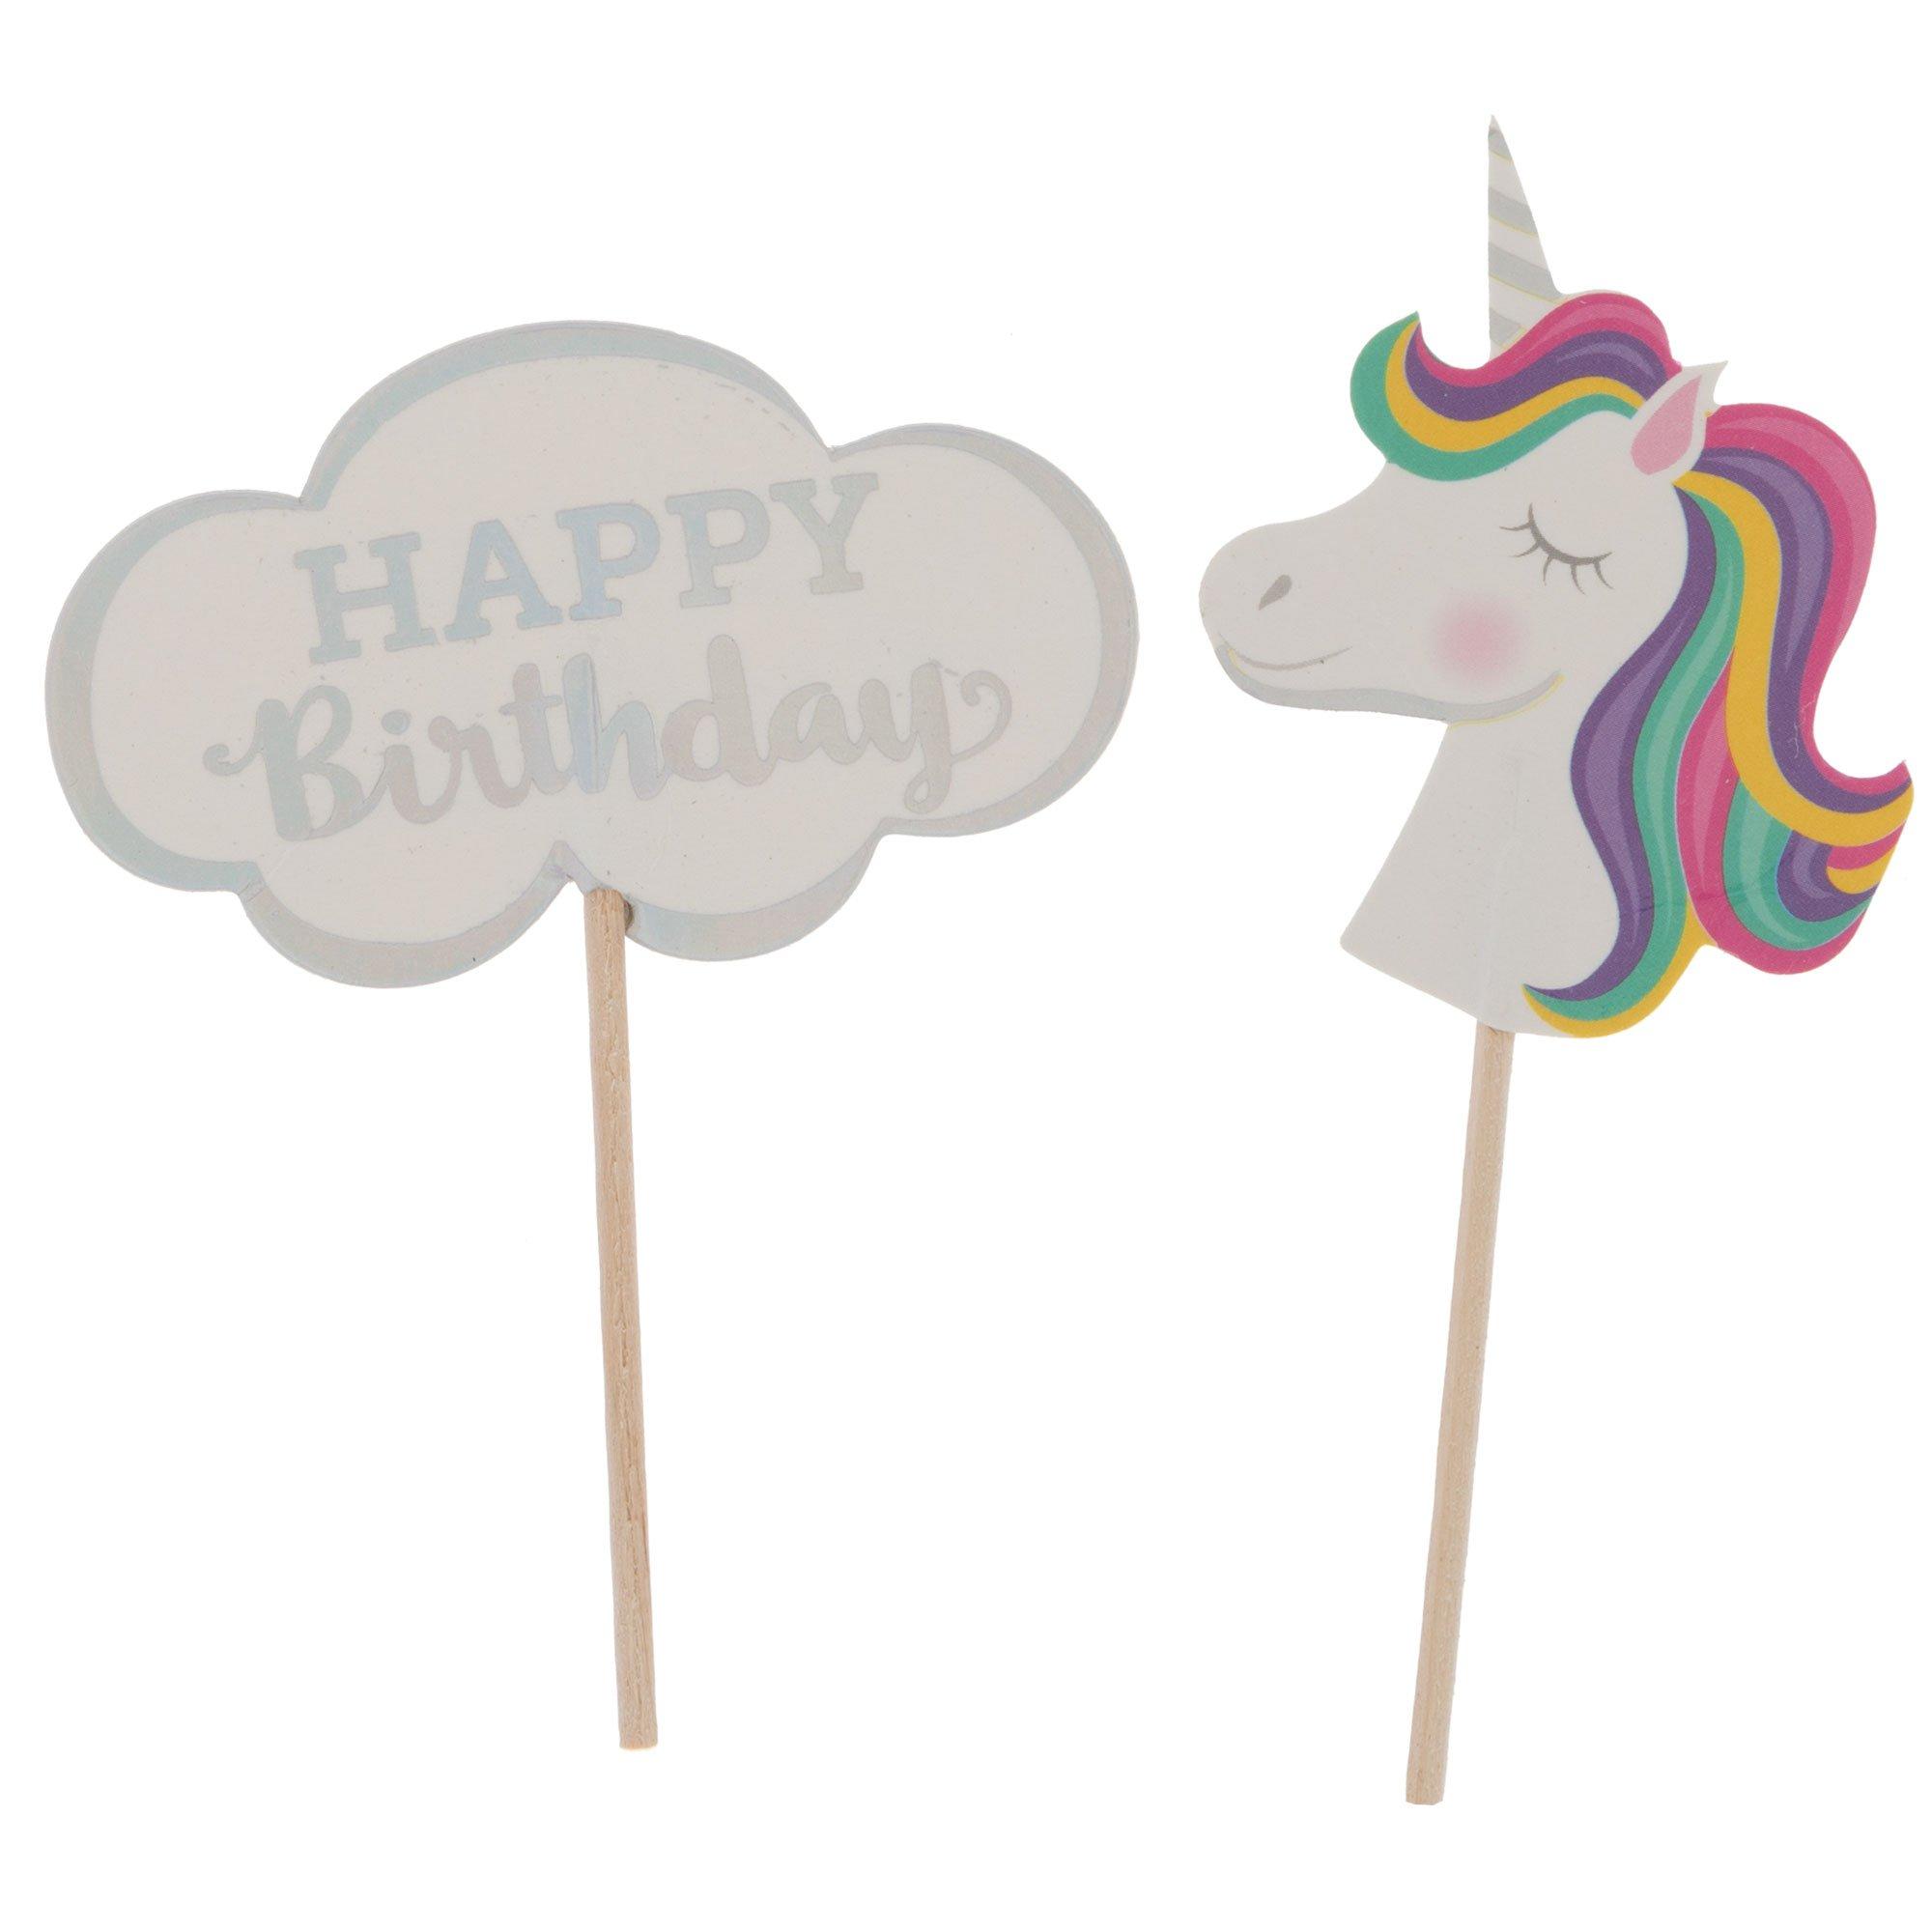 Cupcake Watercolor Cards • Set of 3 - 5x5 • Confetti or Unicorn